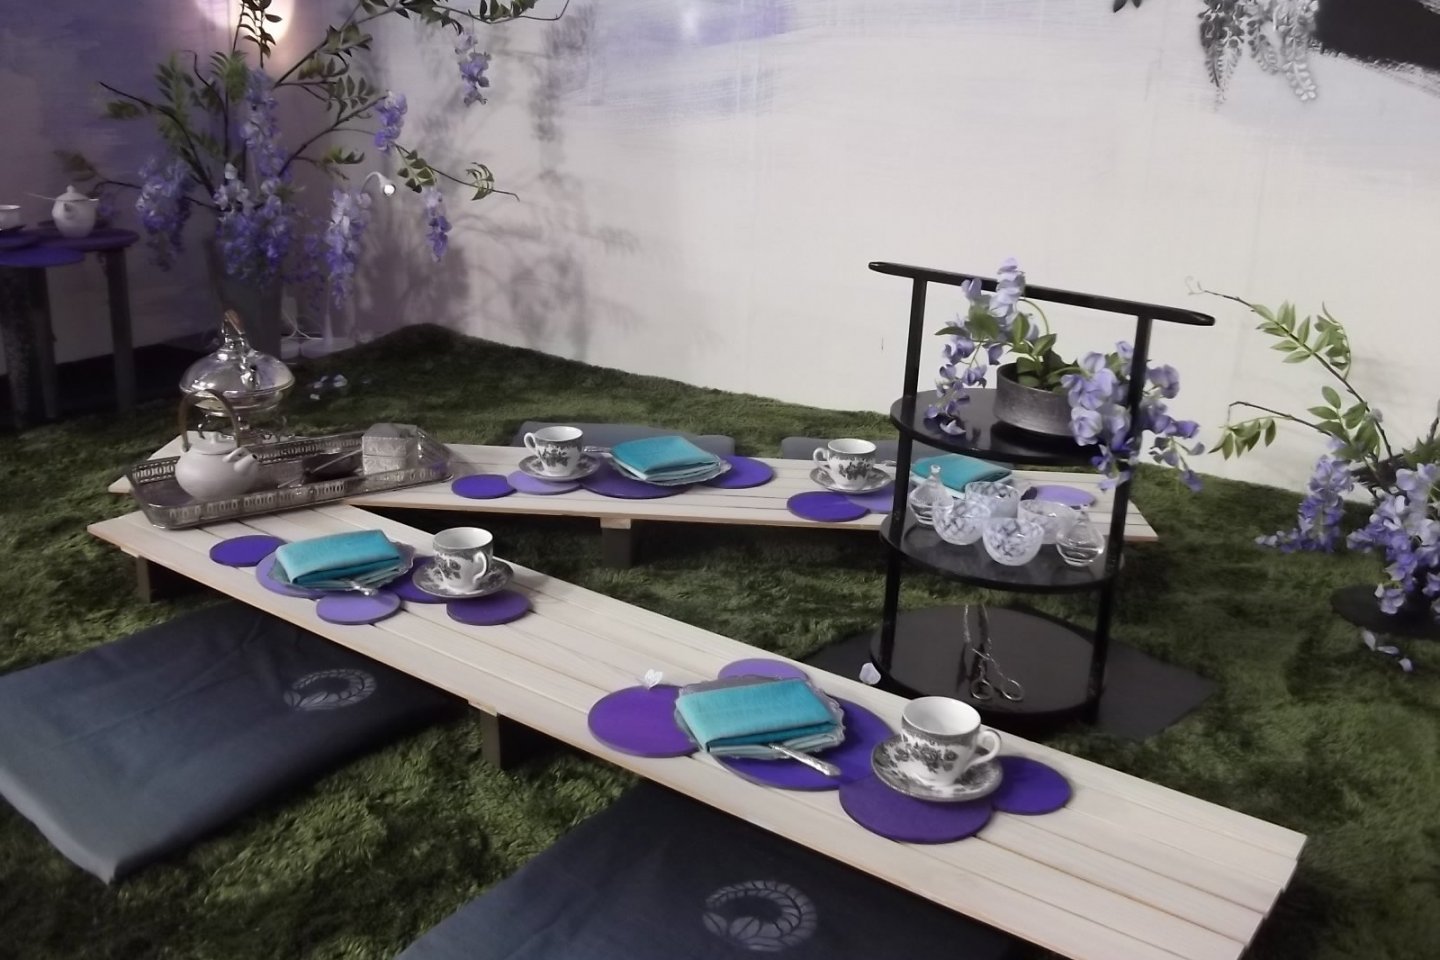 A lavender picnic diorama